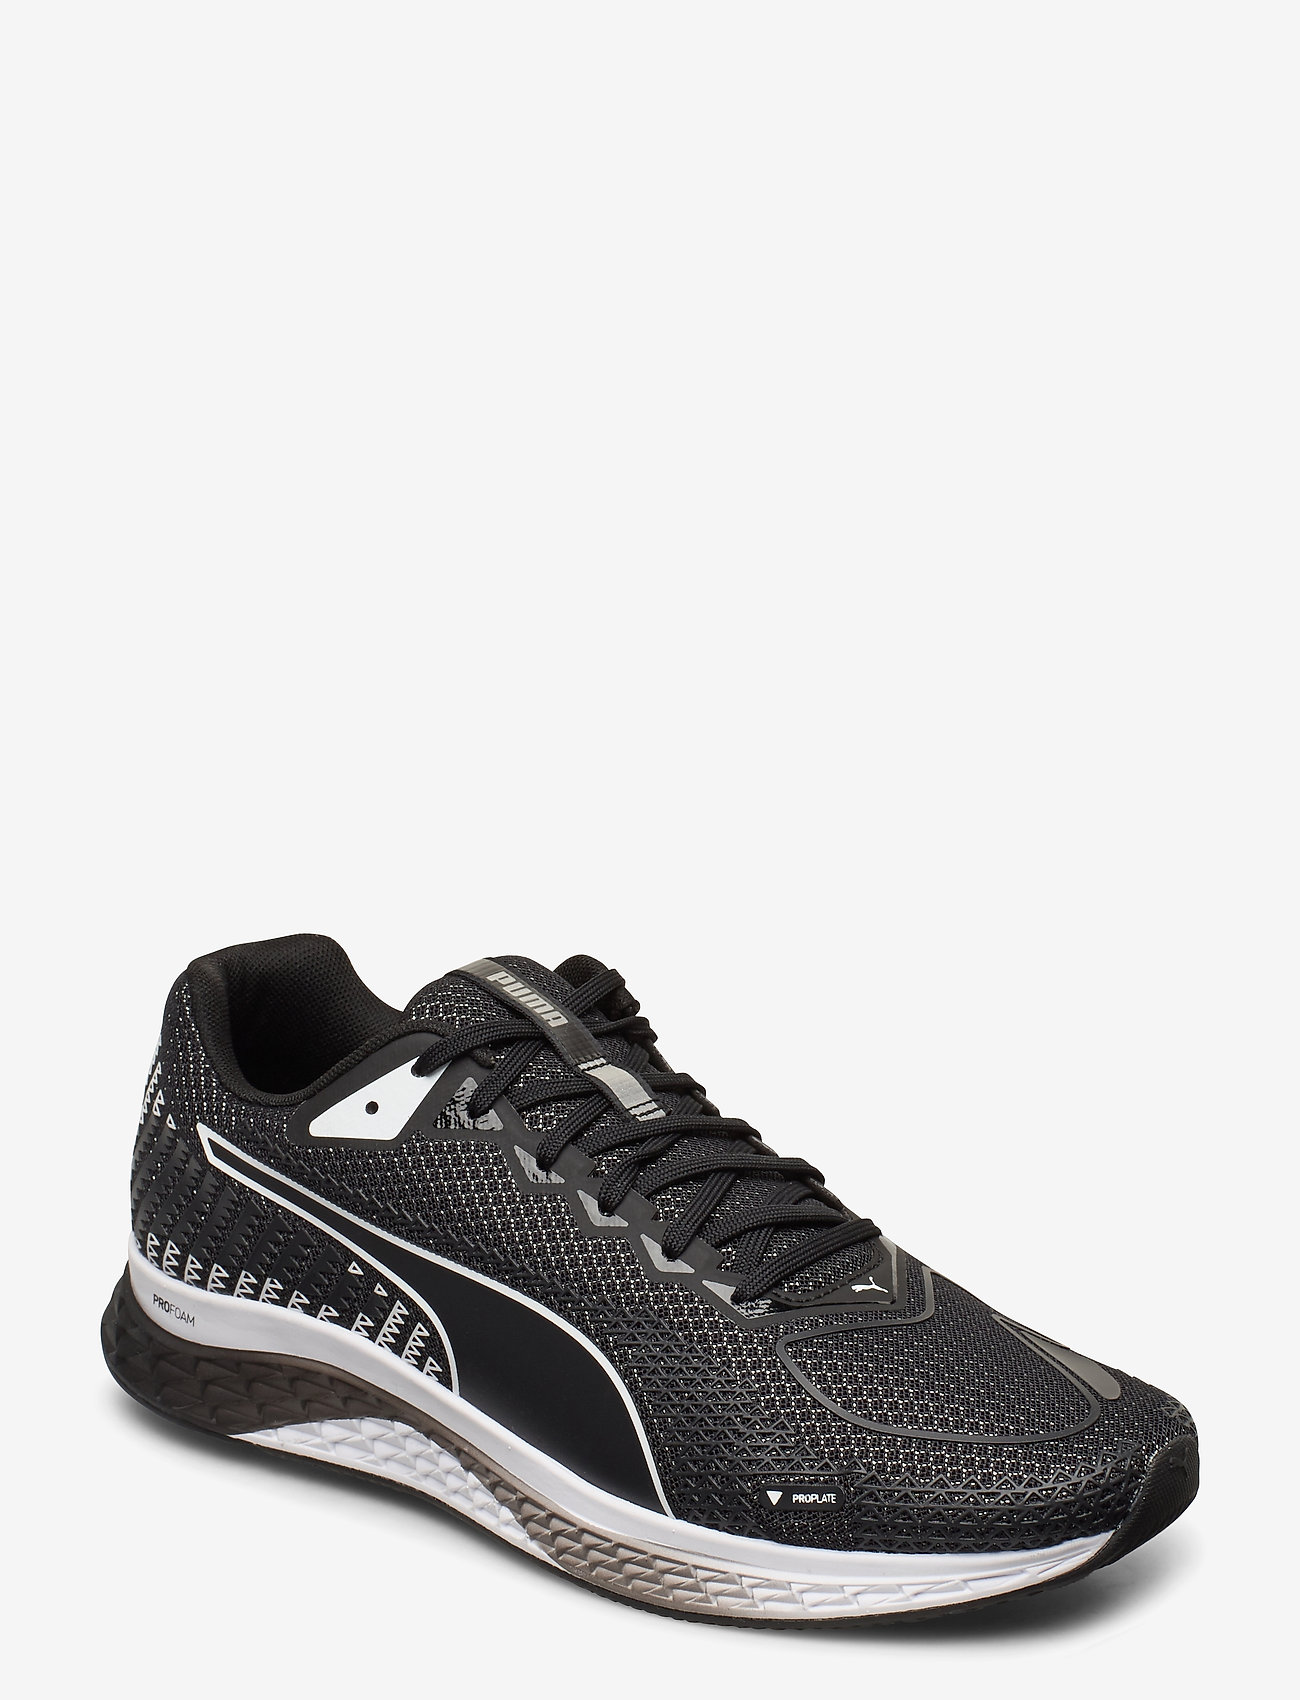 puma speed running shoes